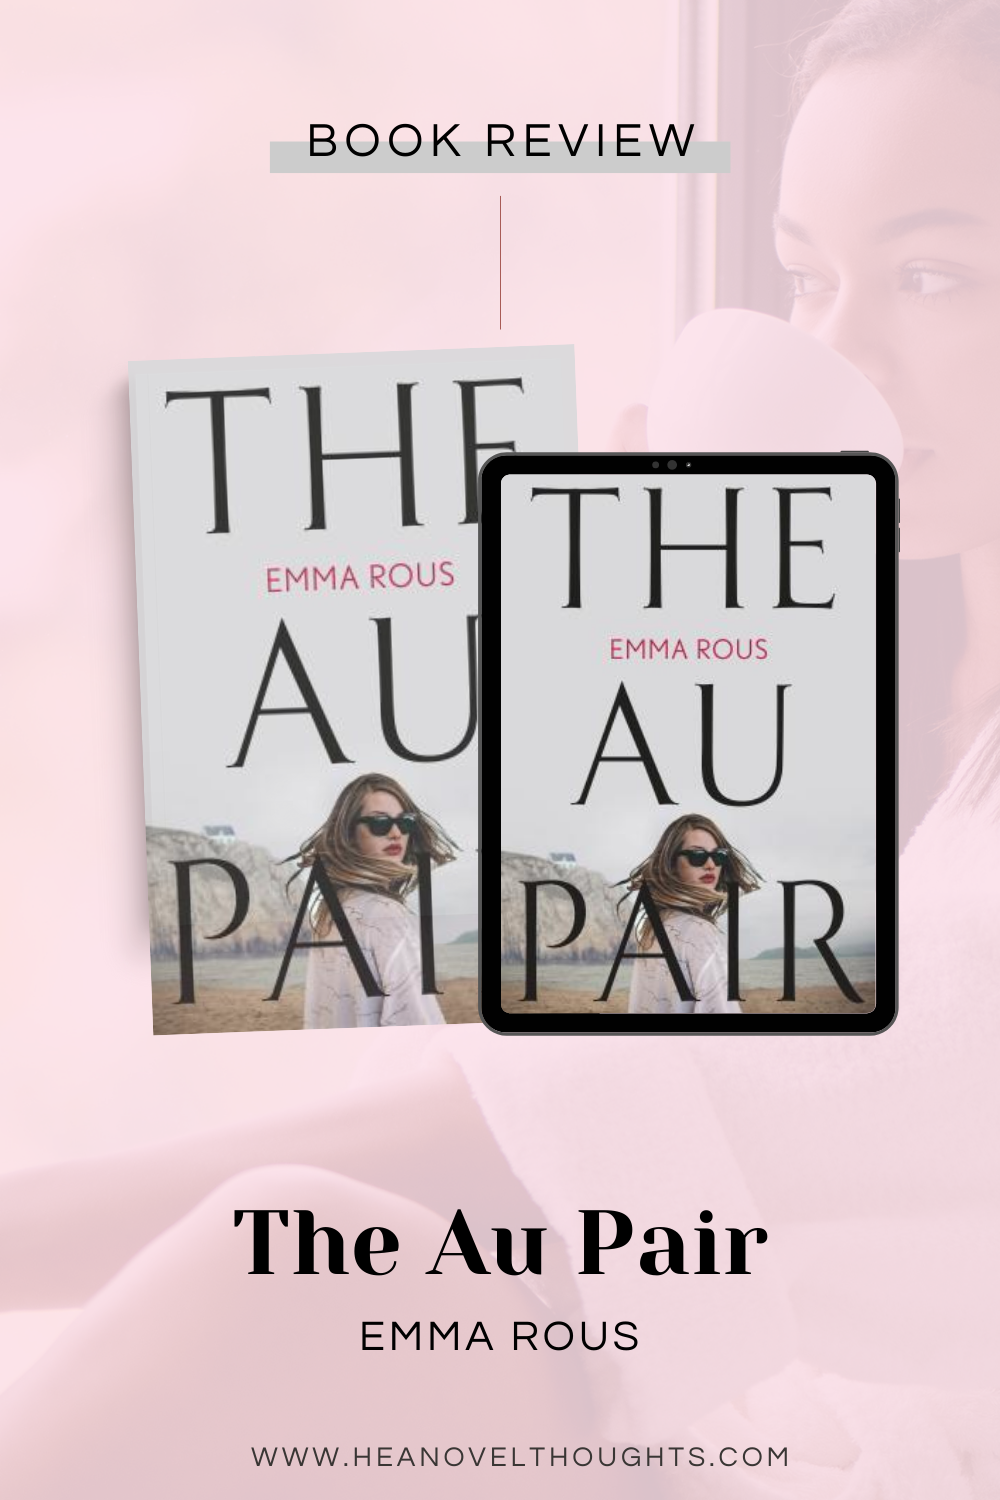 The Au Pair by Emma Rous